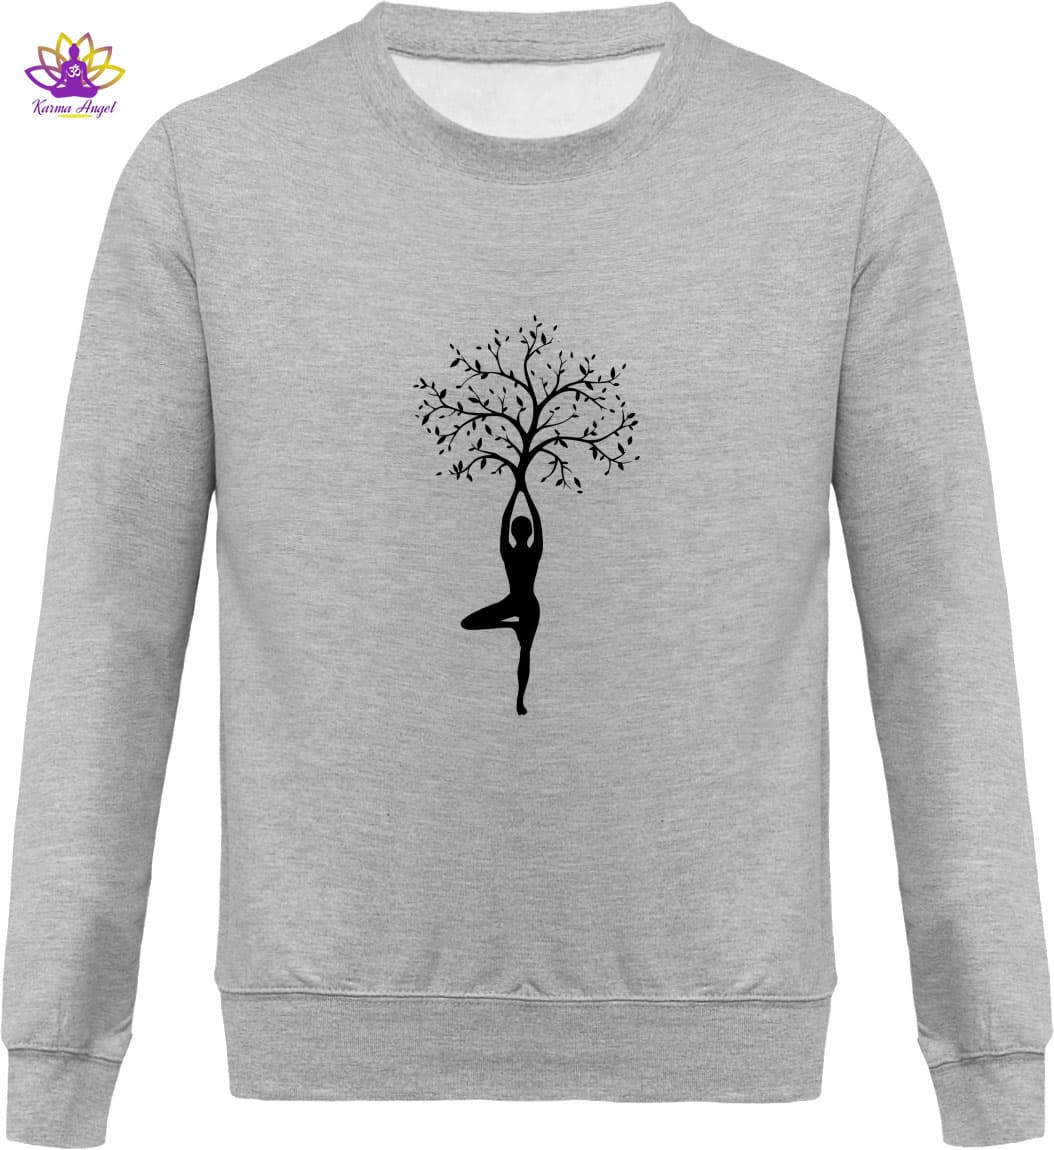 "Yoga tree" - Sweatshirt homme en coton bio, plusieurs coloris 